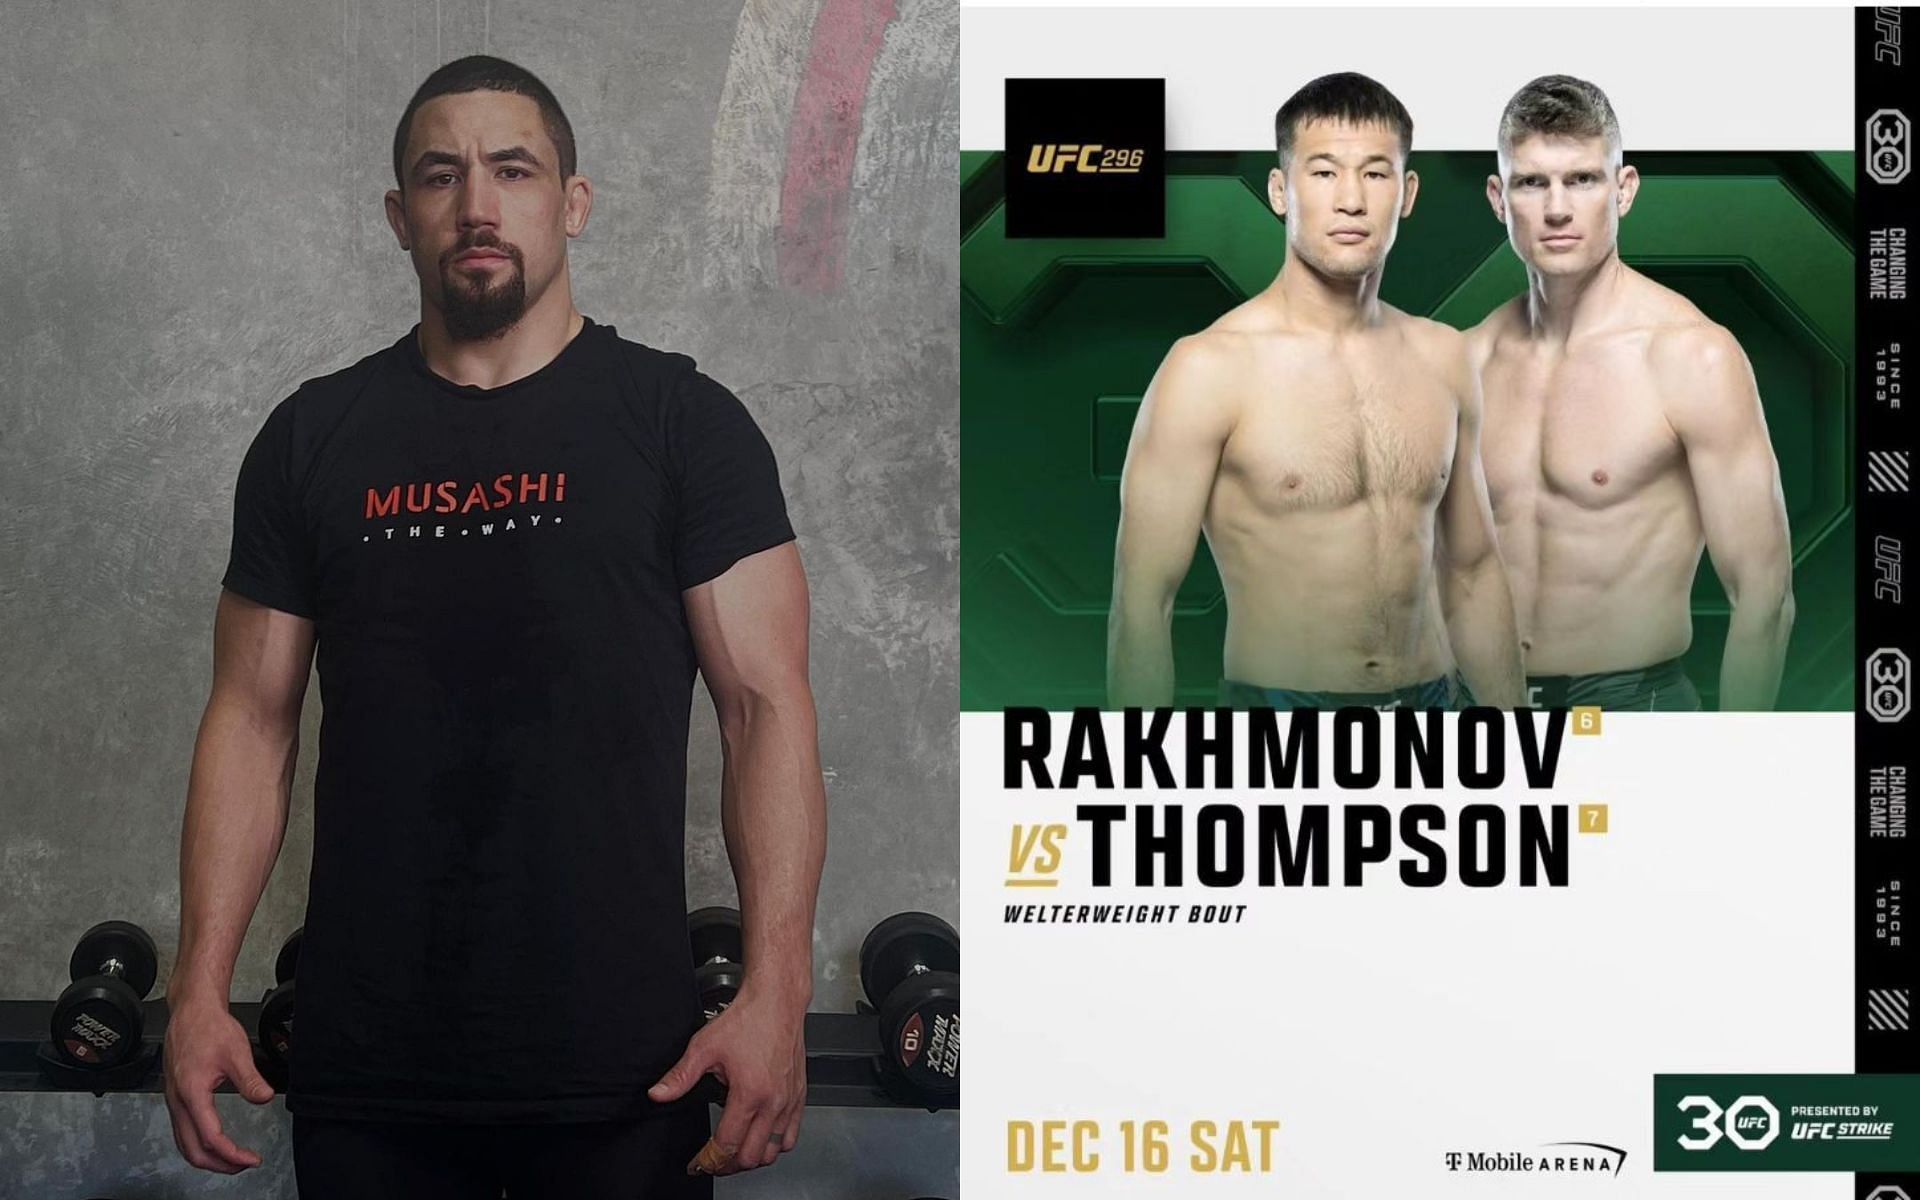 Robert Whittaker (left) and Shavkat Rakhmonov vs Stephen Thompson fight poster (right) (Image credits @wonderboymma and @robwhittakermma on Instagram)